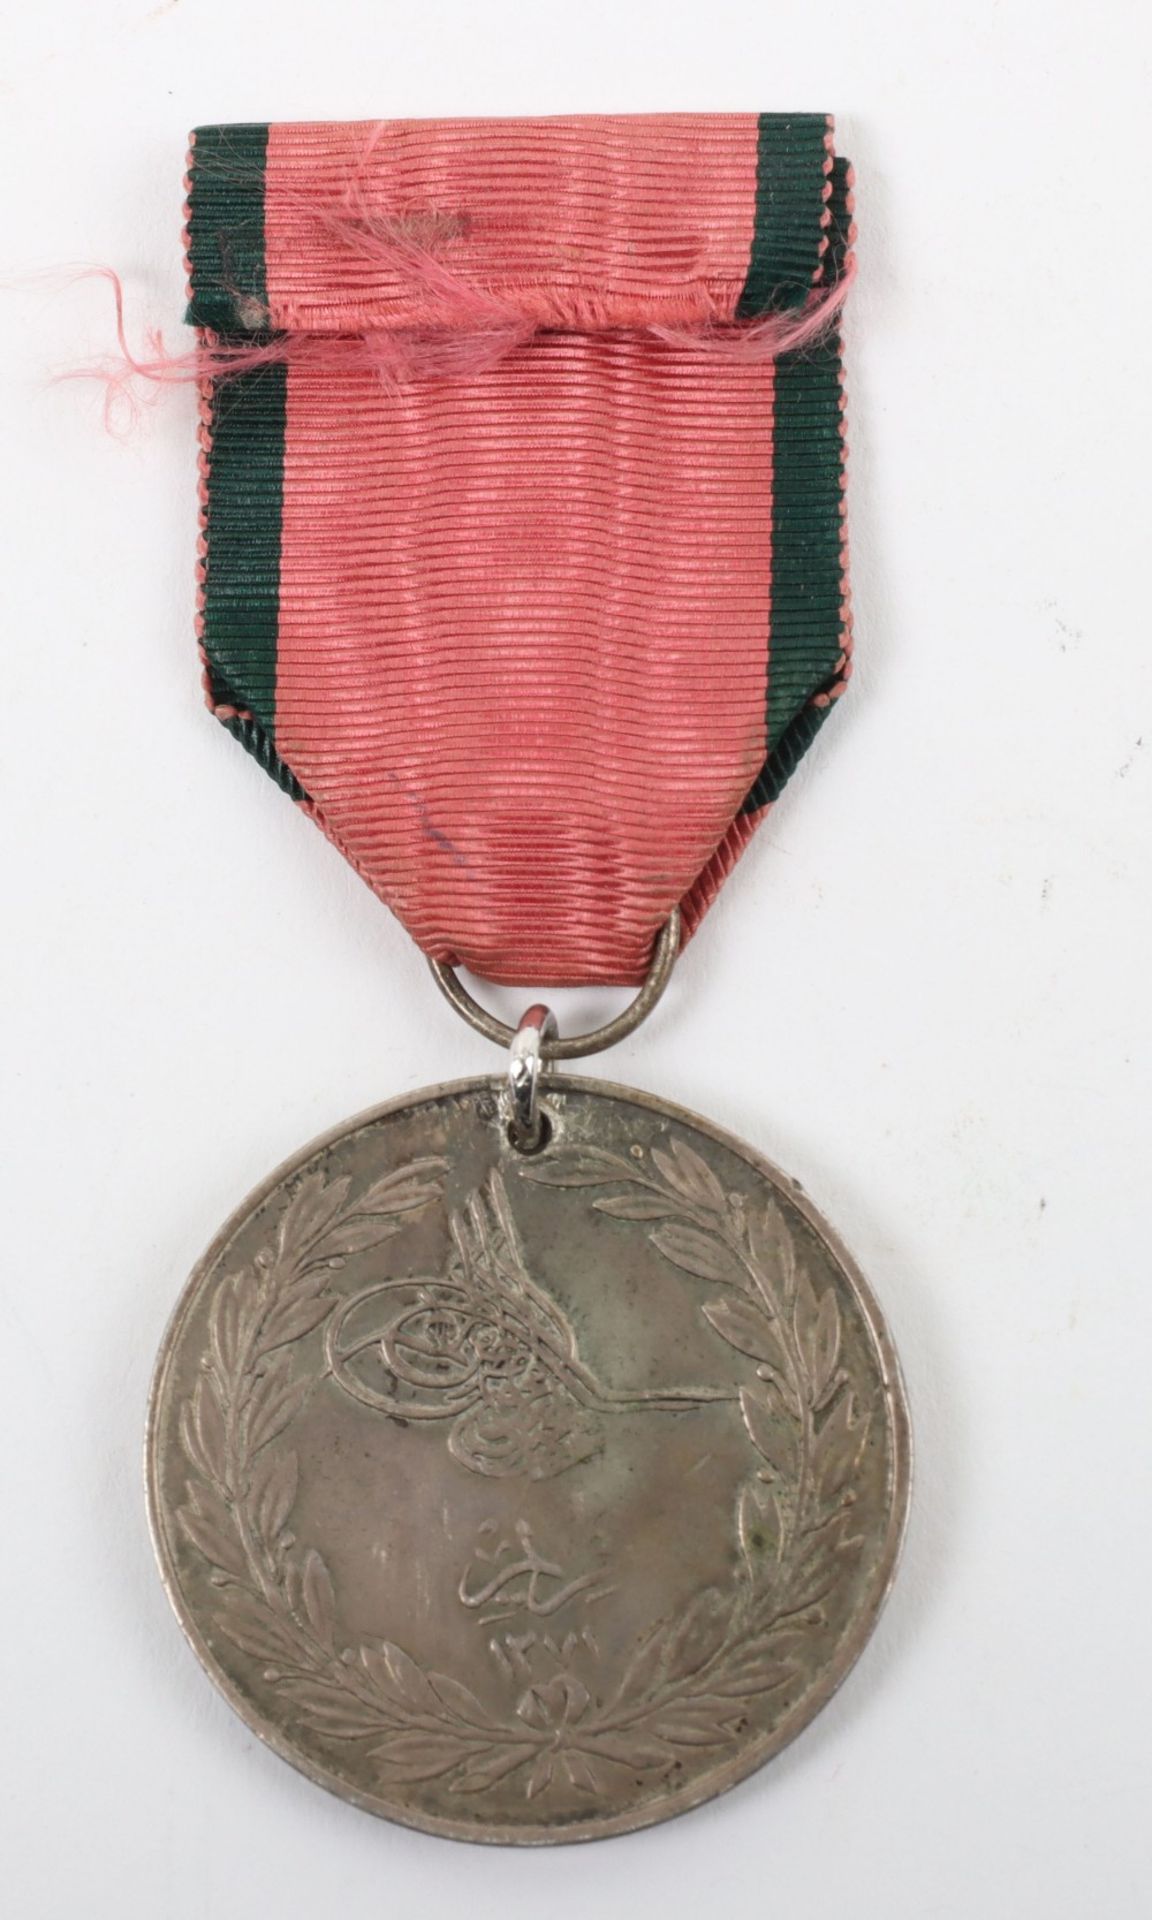 Turkish Crimea Medal 1855 - Image 2 of 2